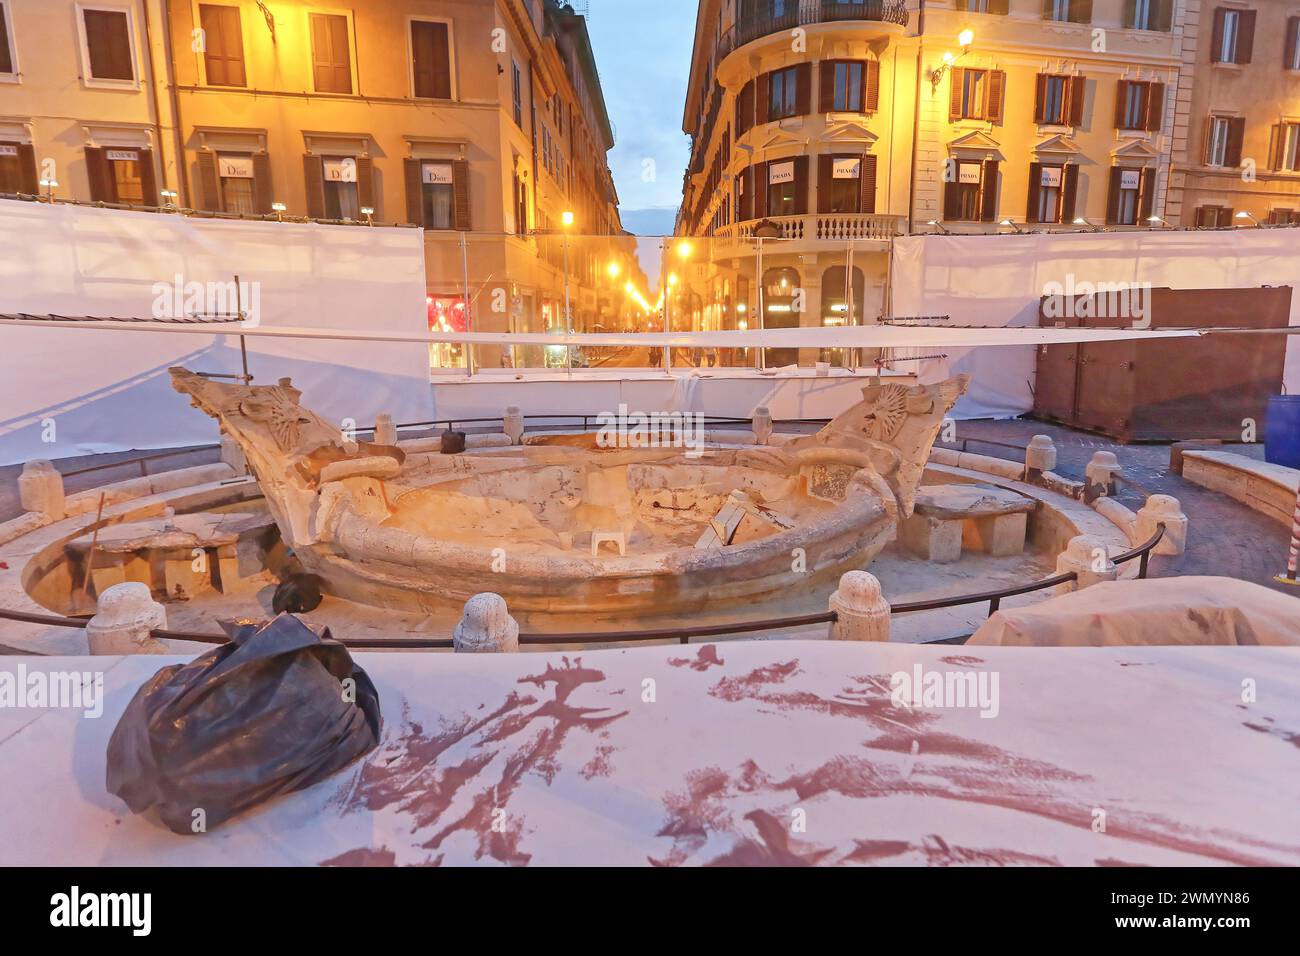 Rom, Italien - 29. Juni 2014: Fontana della Barcaccia Piazza di Spagna Brunnen im Bau Gerüste bei Nacht. Stockfoto